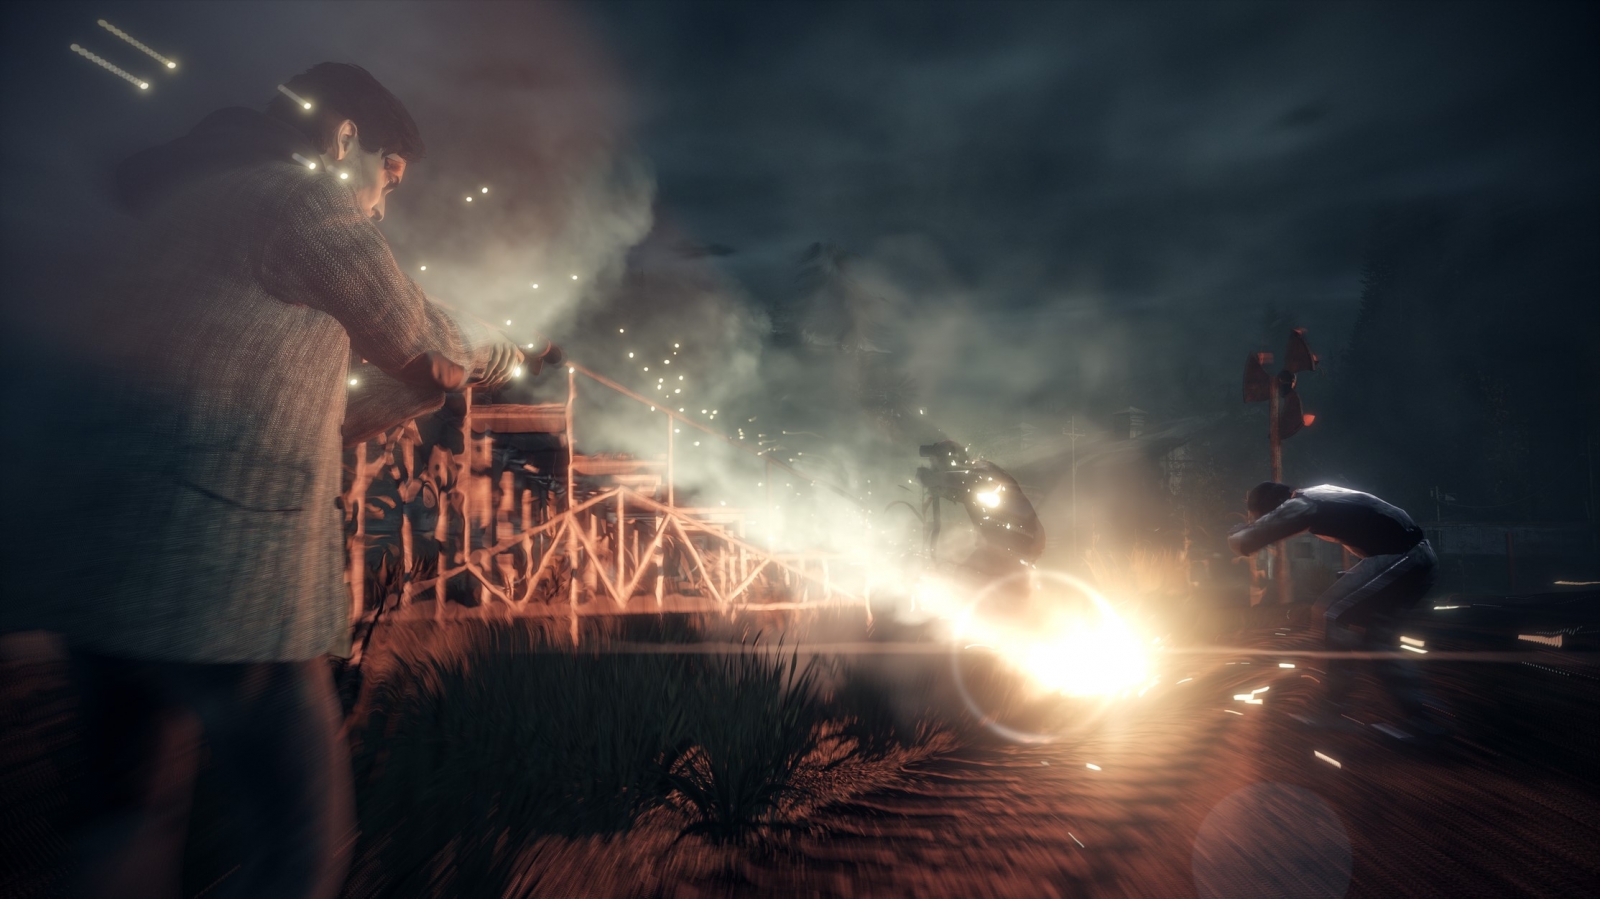 Alan Wake Remastered (PS5) 4K 60FPS HDR Gameplay - (PS5 Version) 